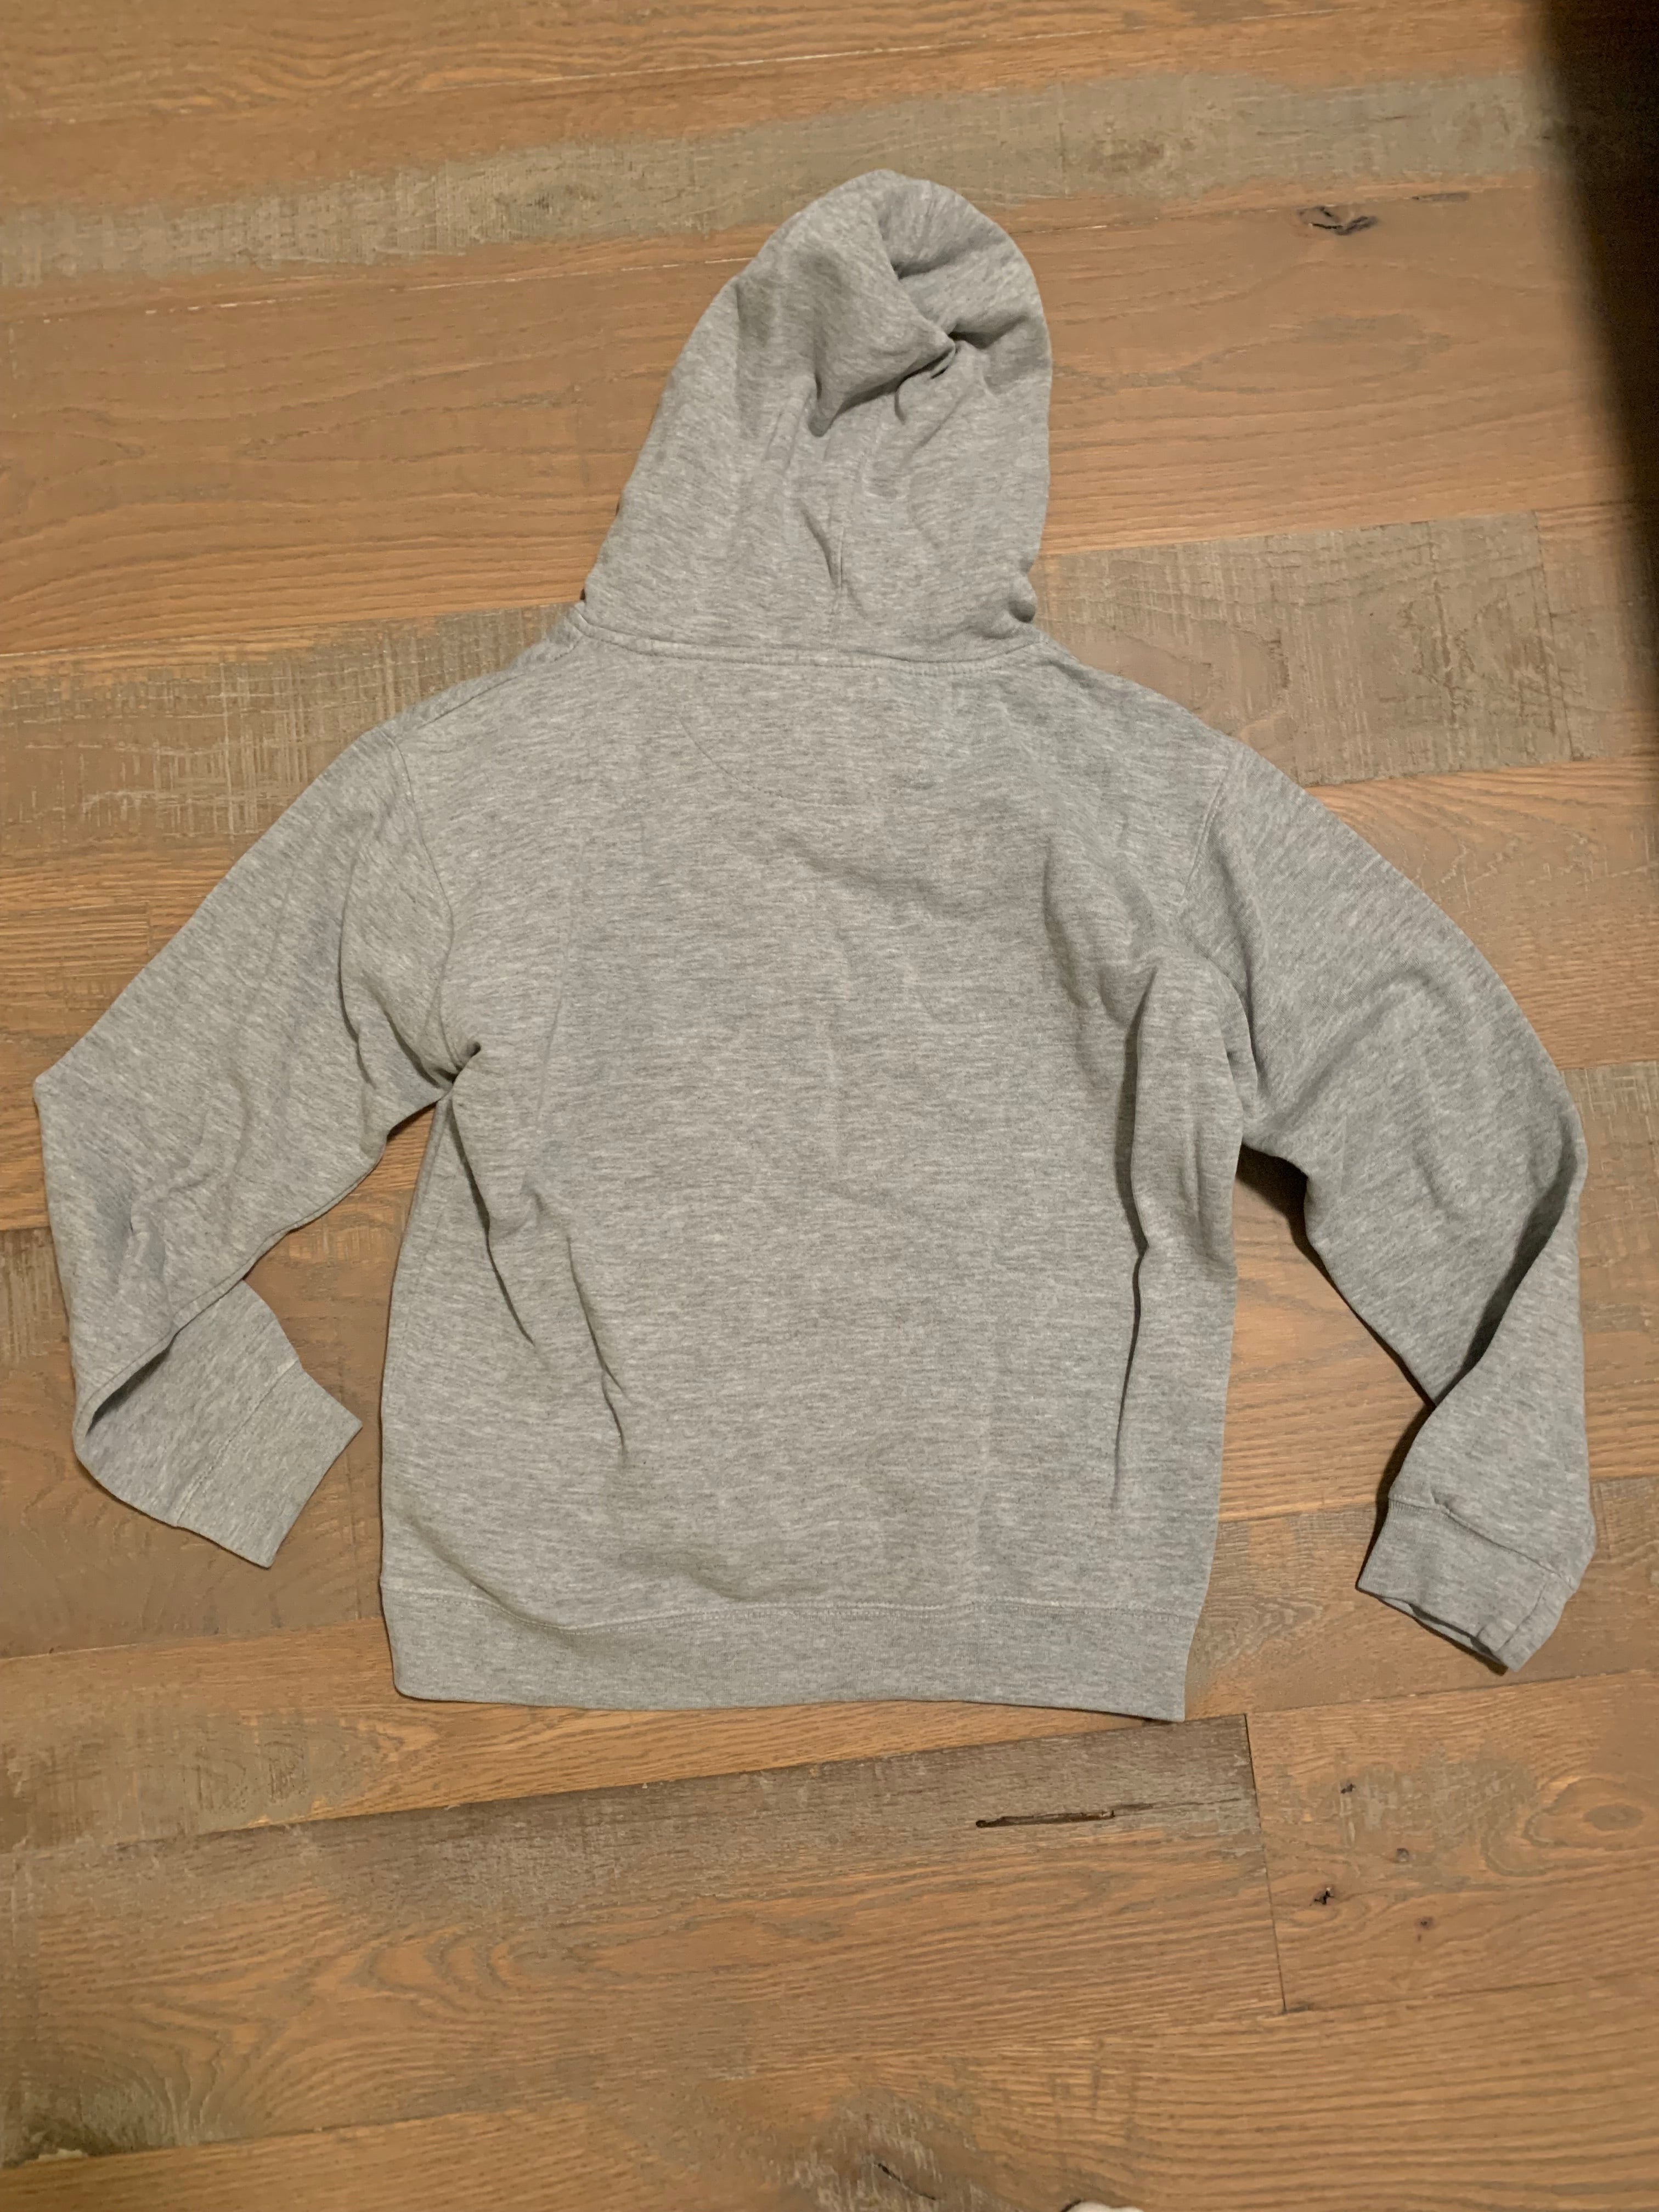 Quebec Nordiques Sweatshirts & Hoodies for Sale